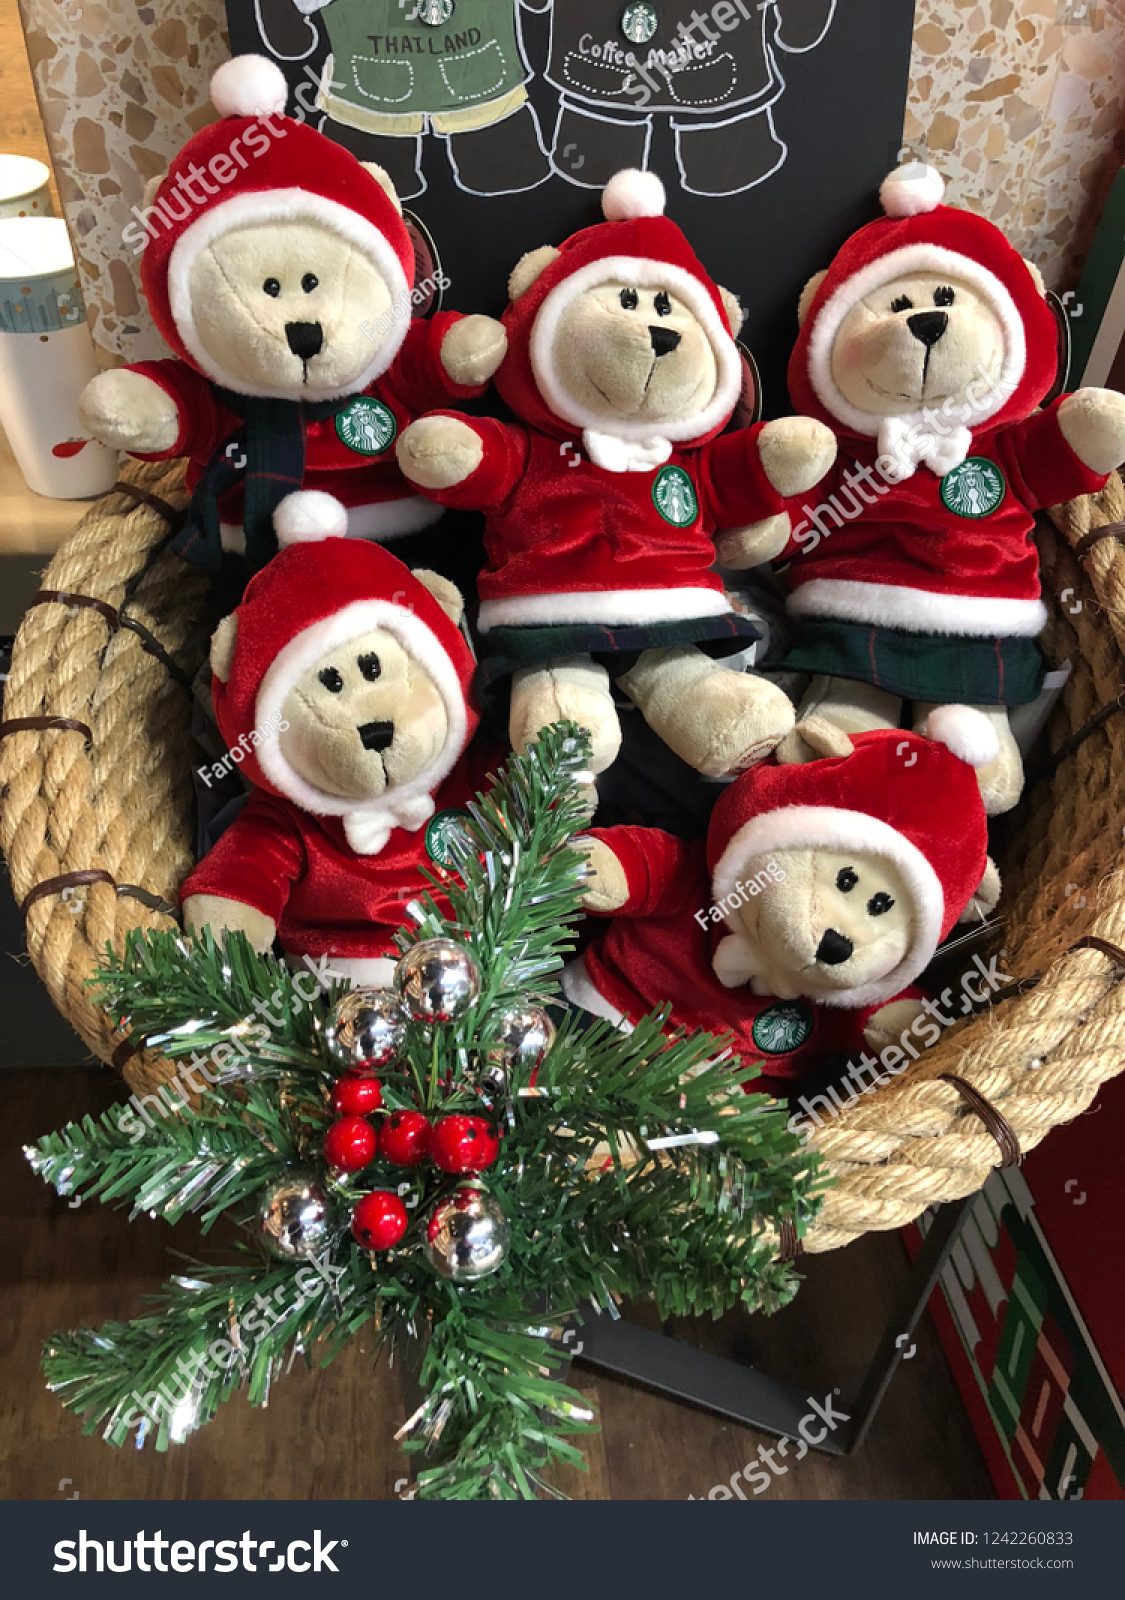 starbucks christmas bears 2018